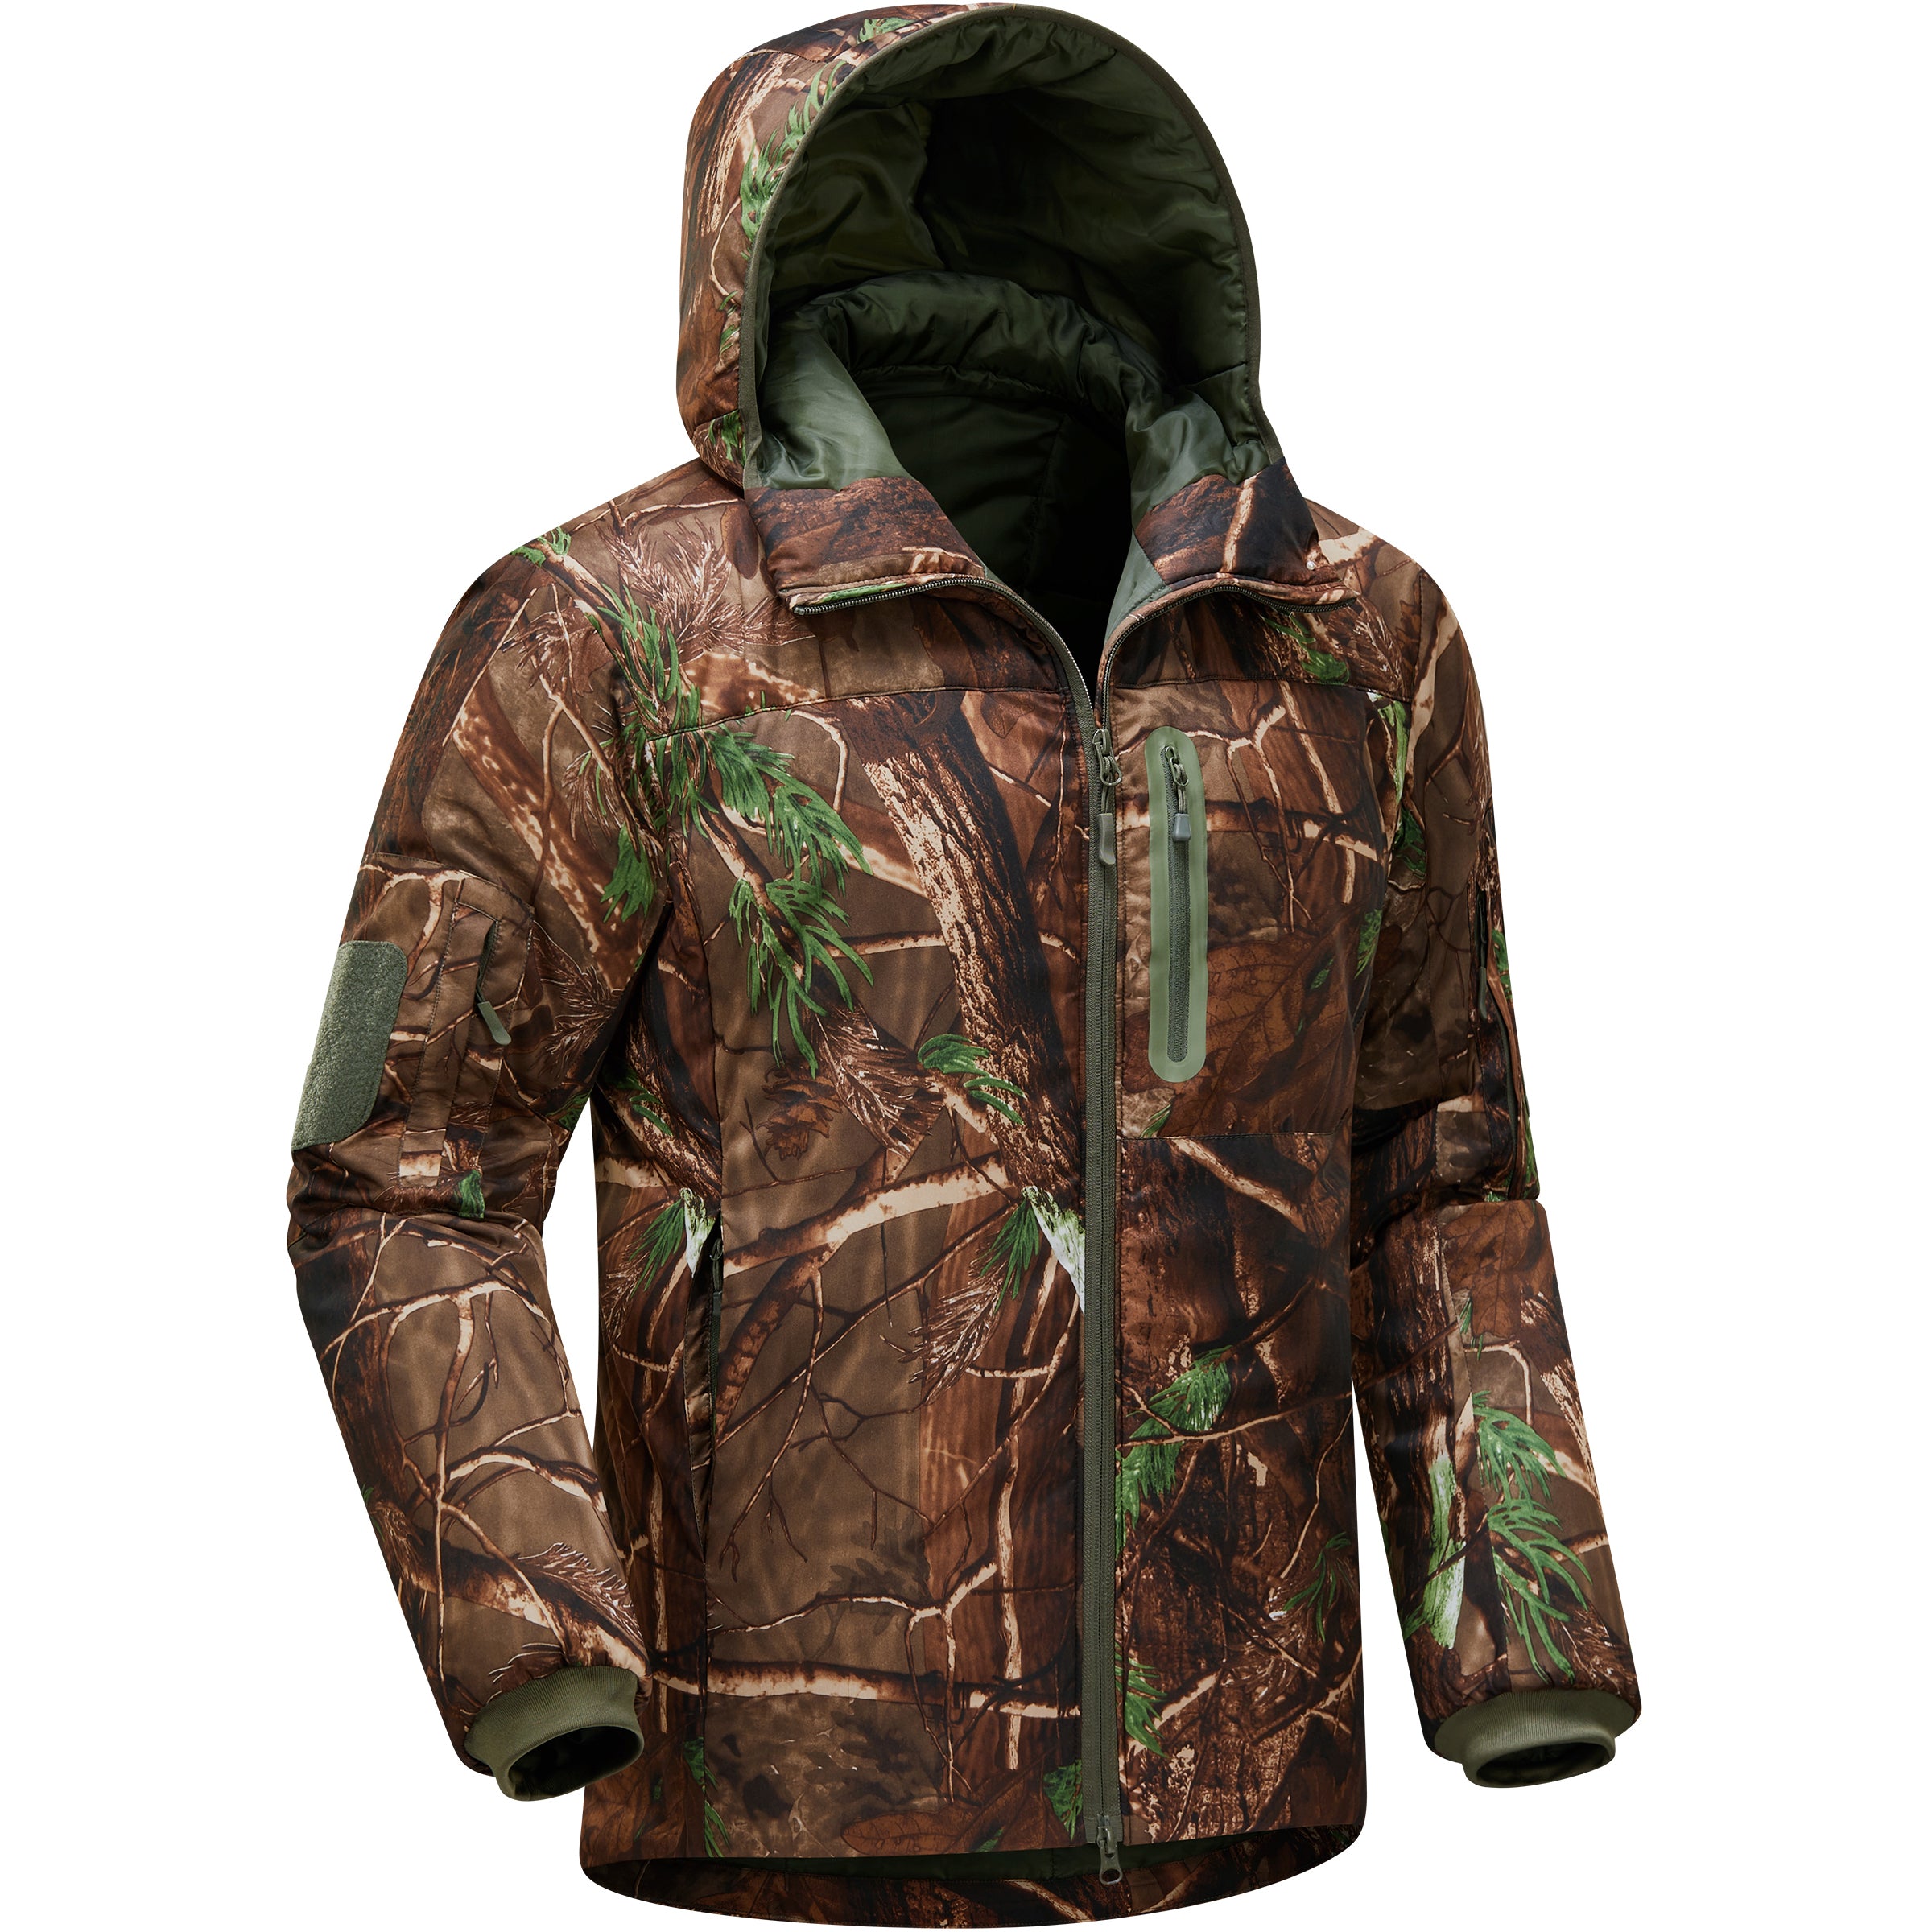 GSX Fleece Lined RealTree Camo Hunting Jacket Coat Mens XXL (2XL)  Camouflage | eBay